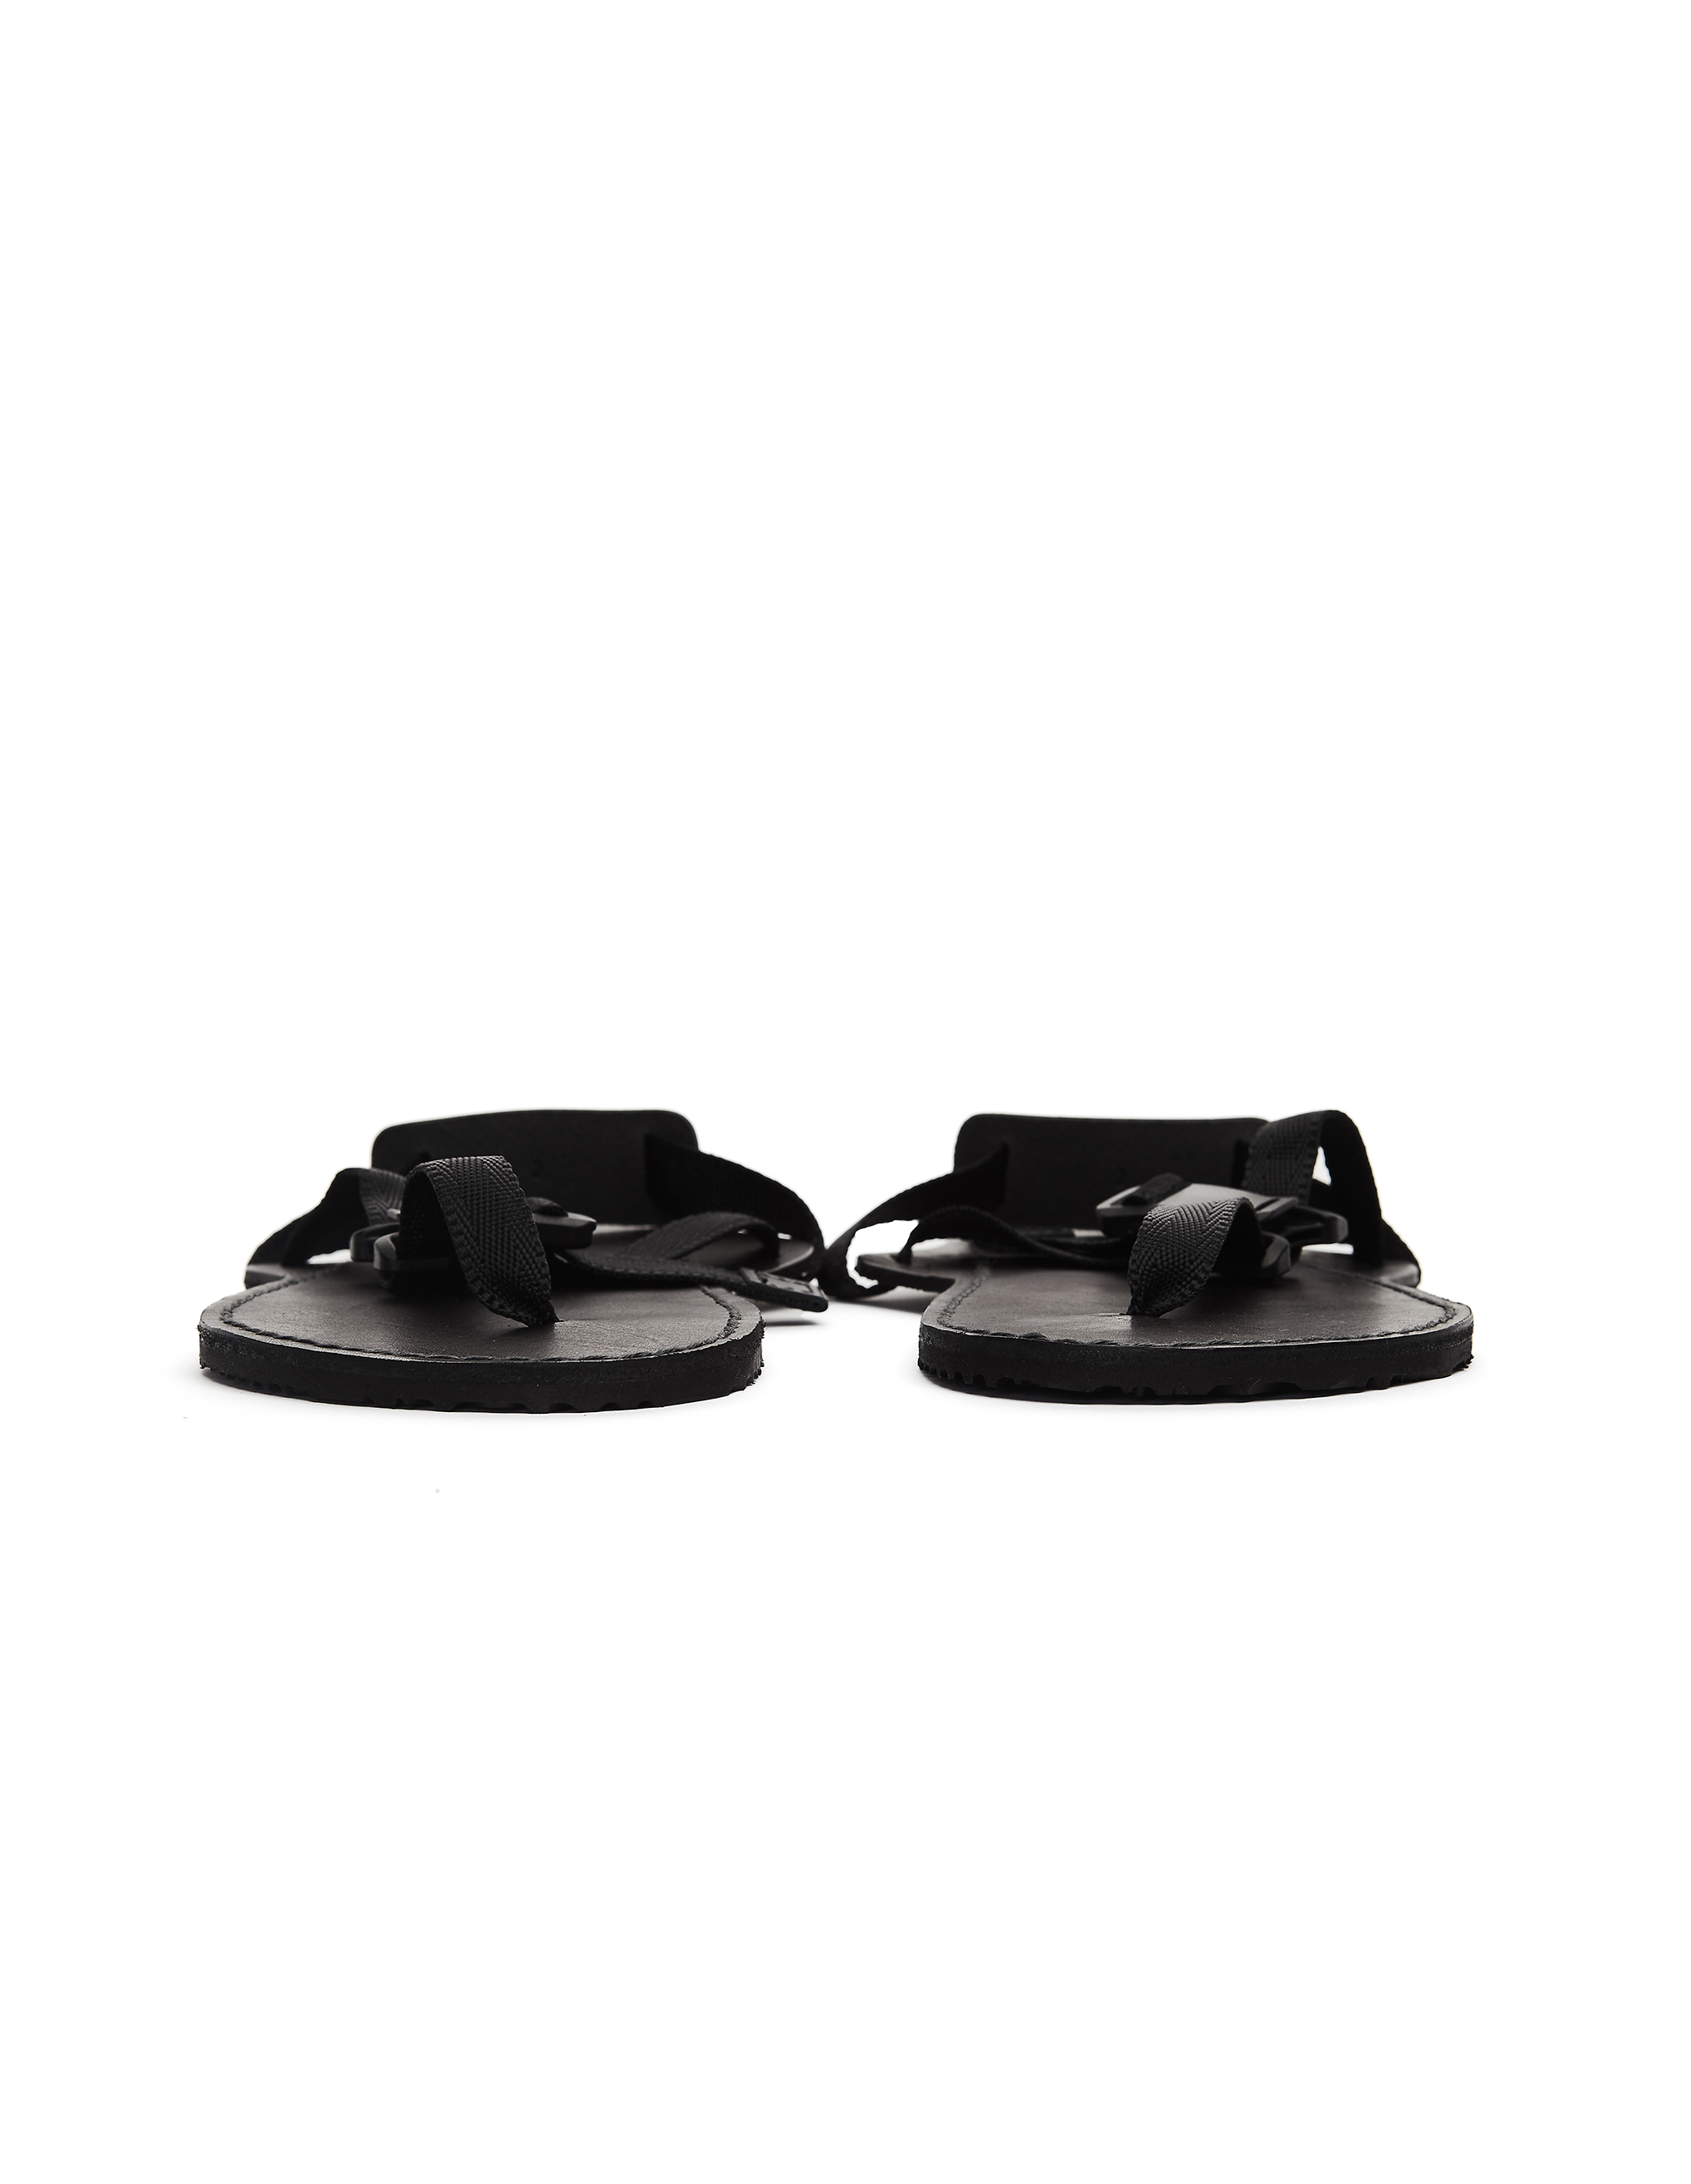 Черные сандалии Devise Strap - Hender Scheme NC-S-DST/blkblk Фото 3